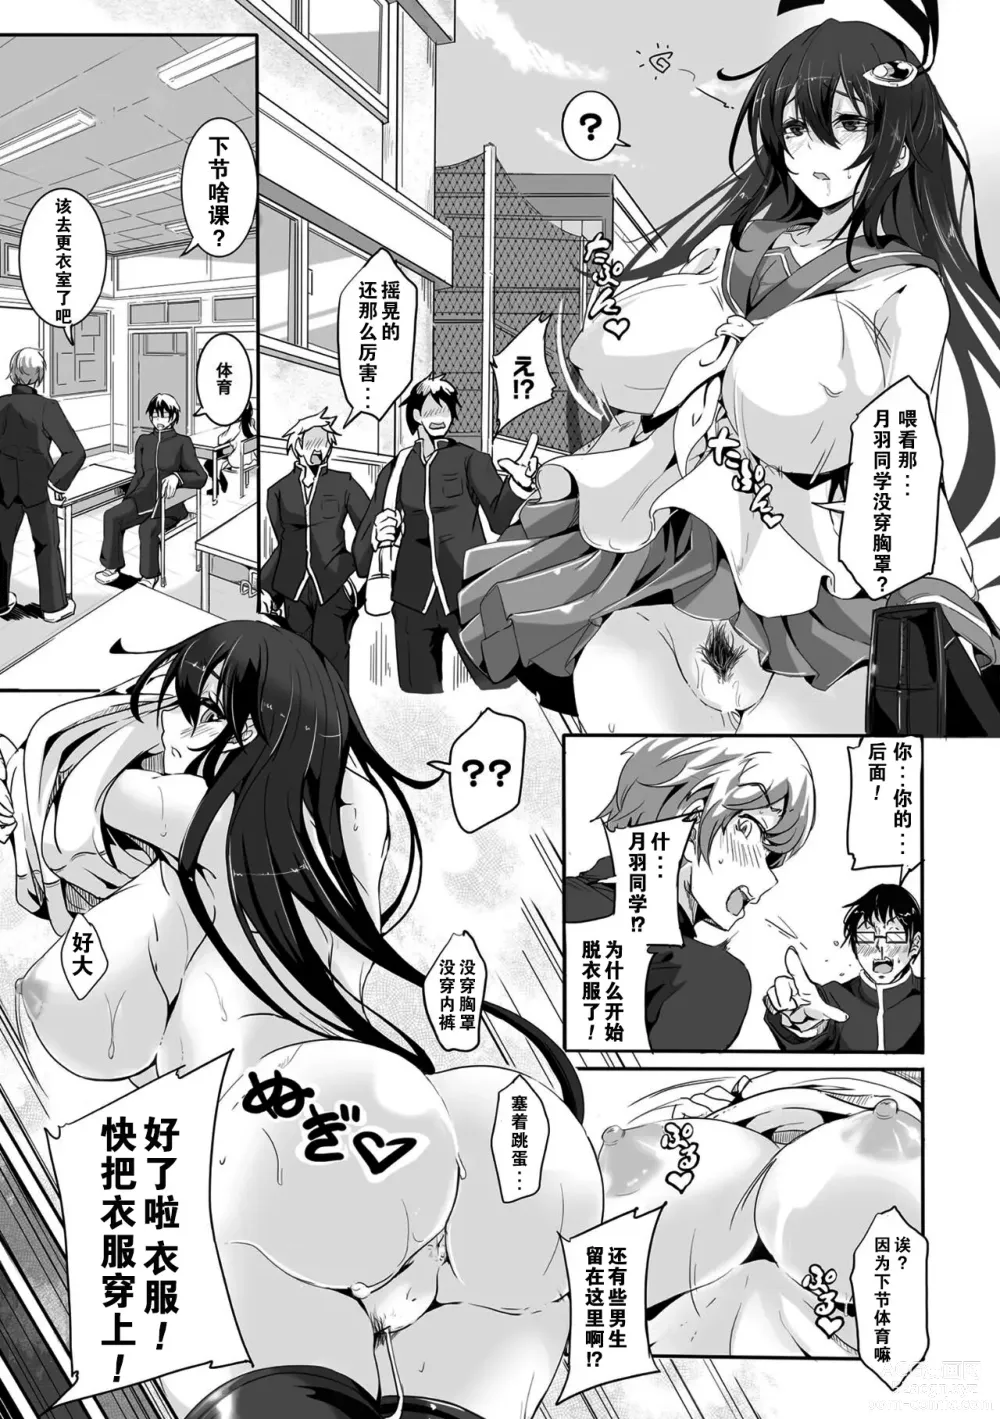 Page 5 of manga Defeating Magical Girl Luna Meltia-Operation to change common sense-